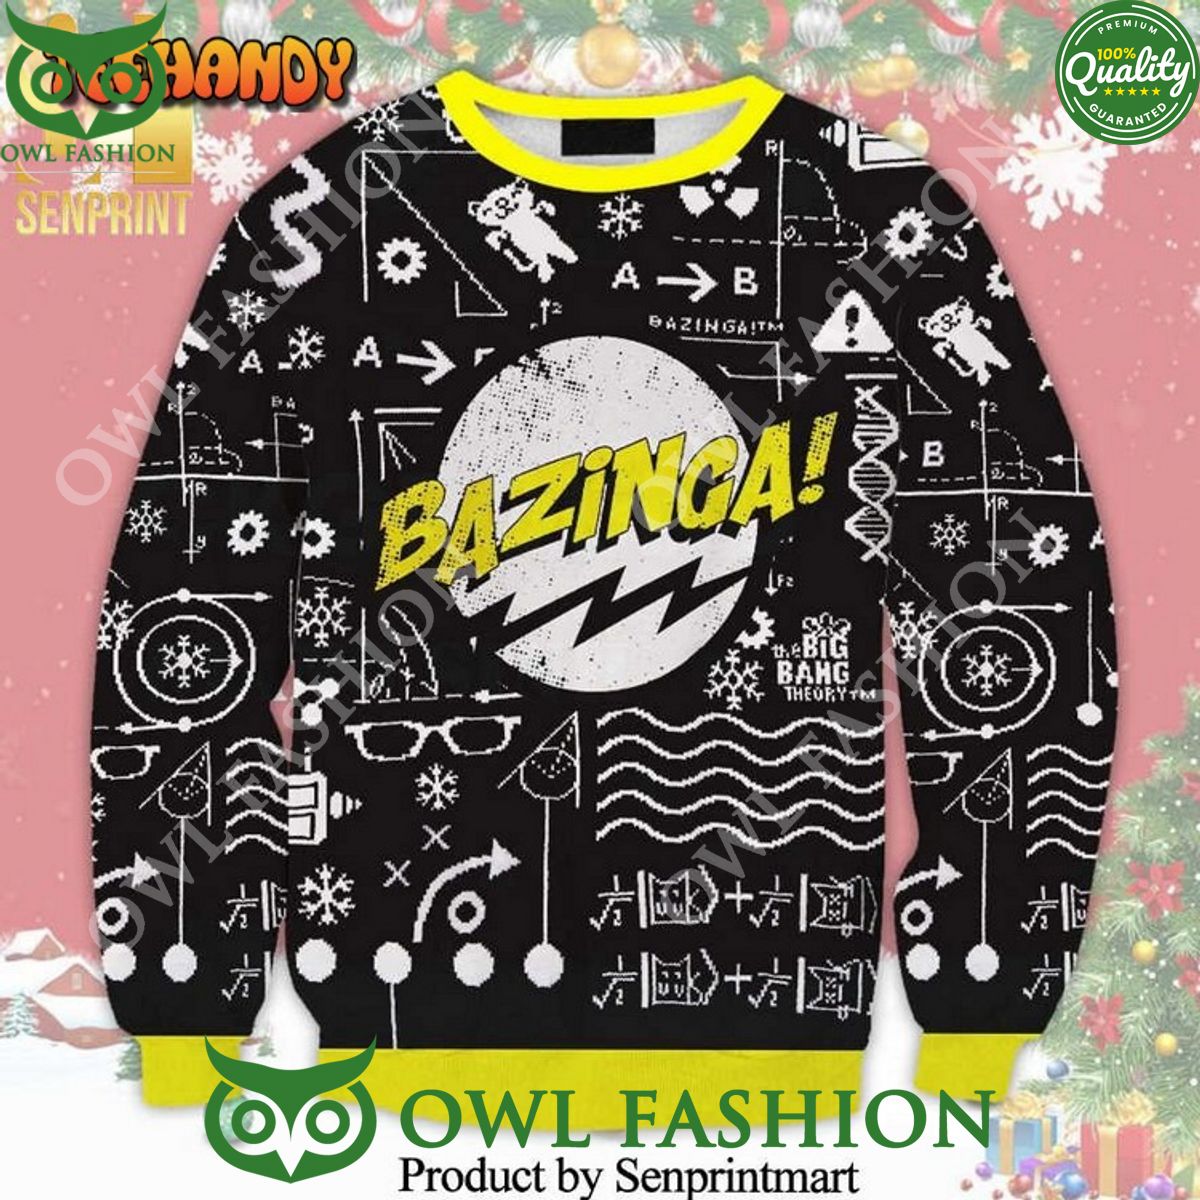 bazinga the big bang theory wiki doodle ugly sweater jumper trending 1 zH7BI.jpg